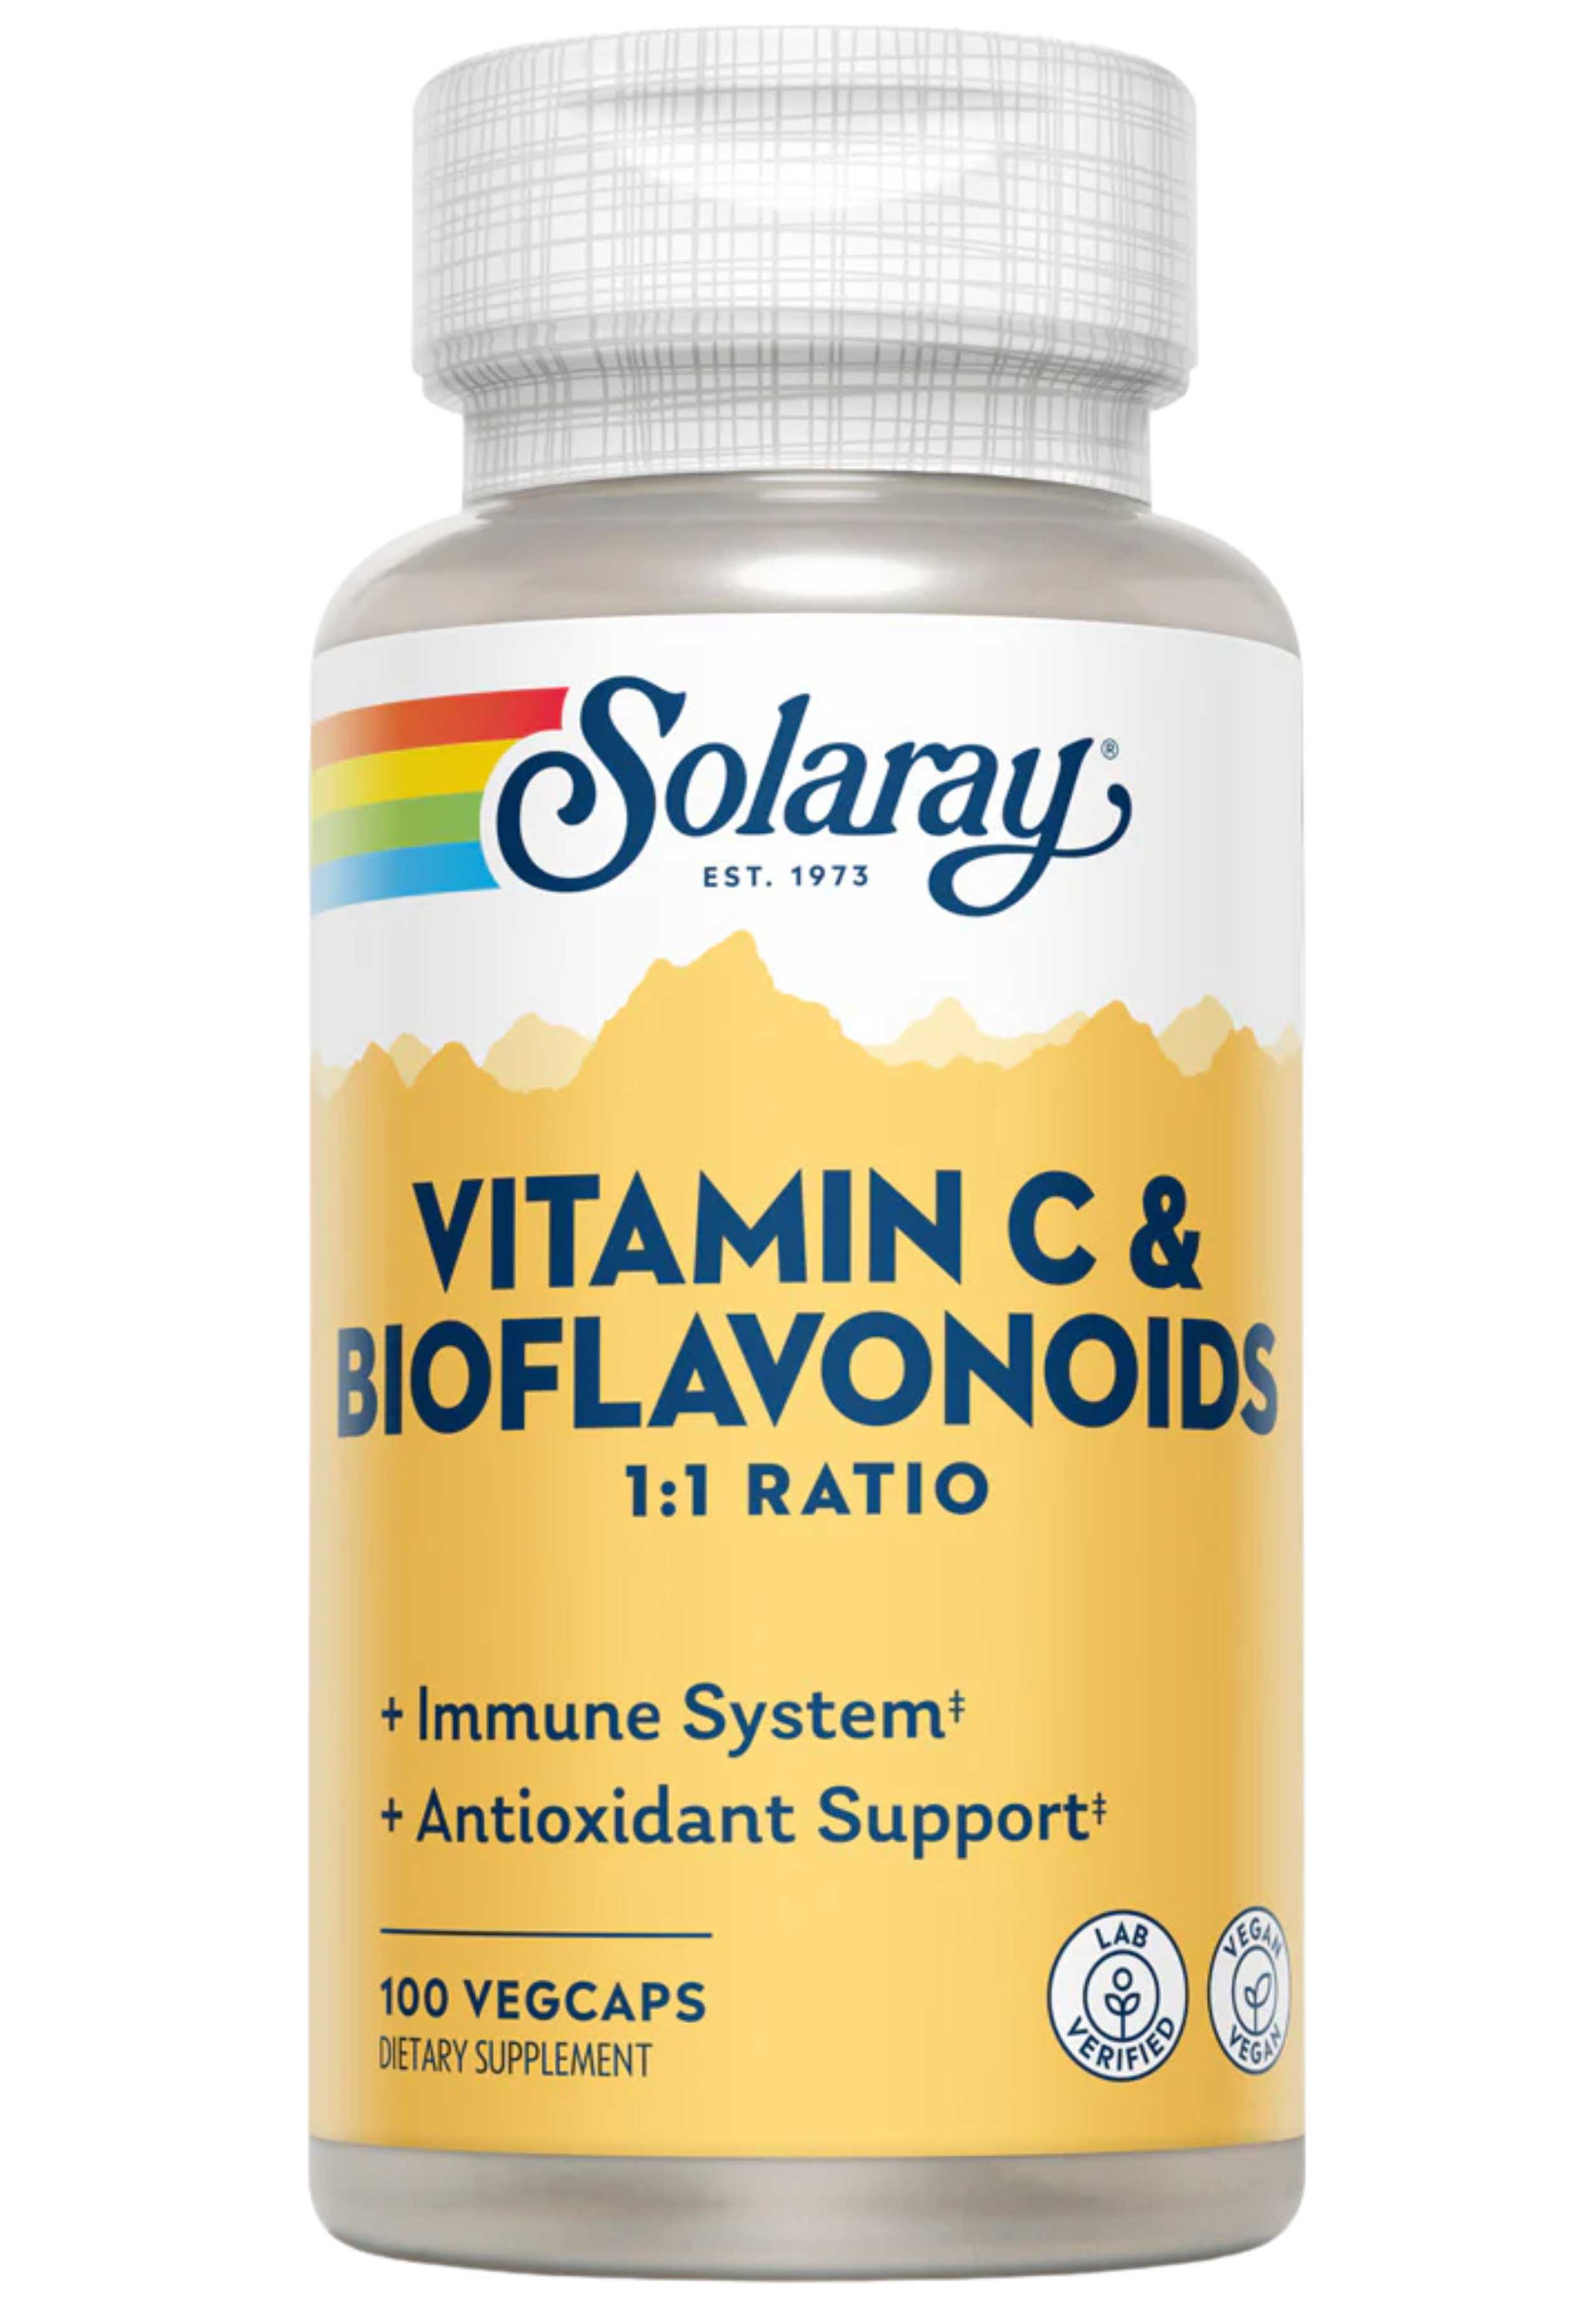 Solaray Vitamin C & Bioflavonoids 1:1